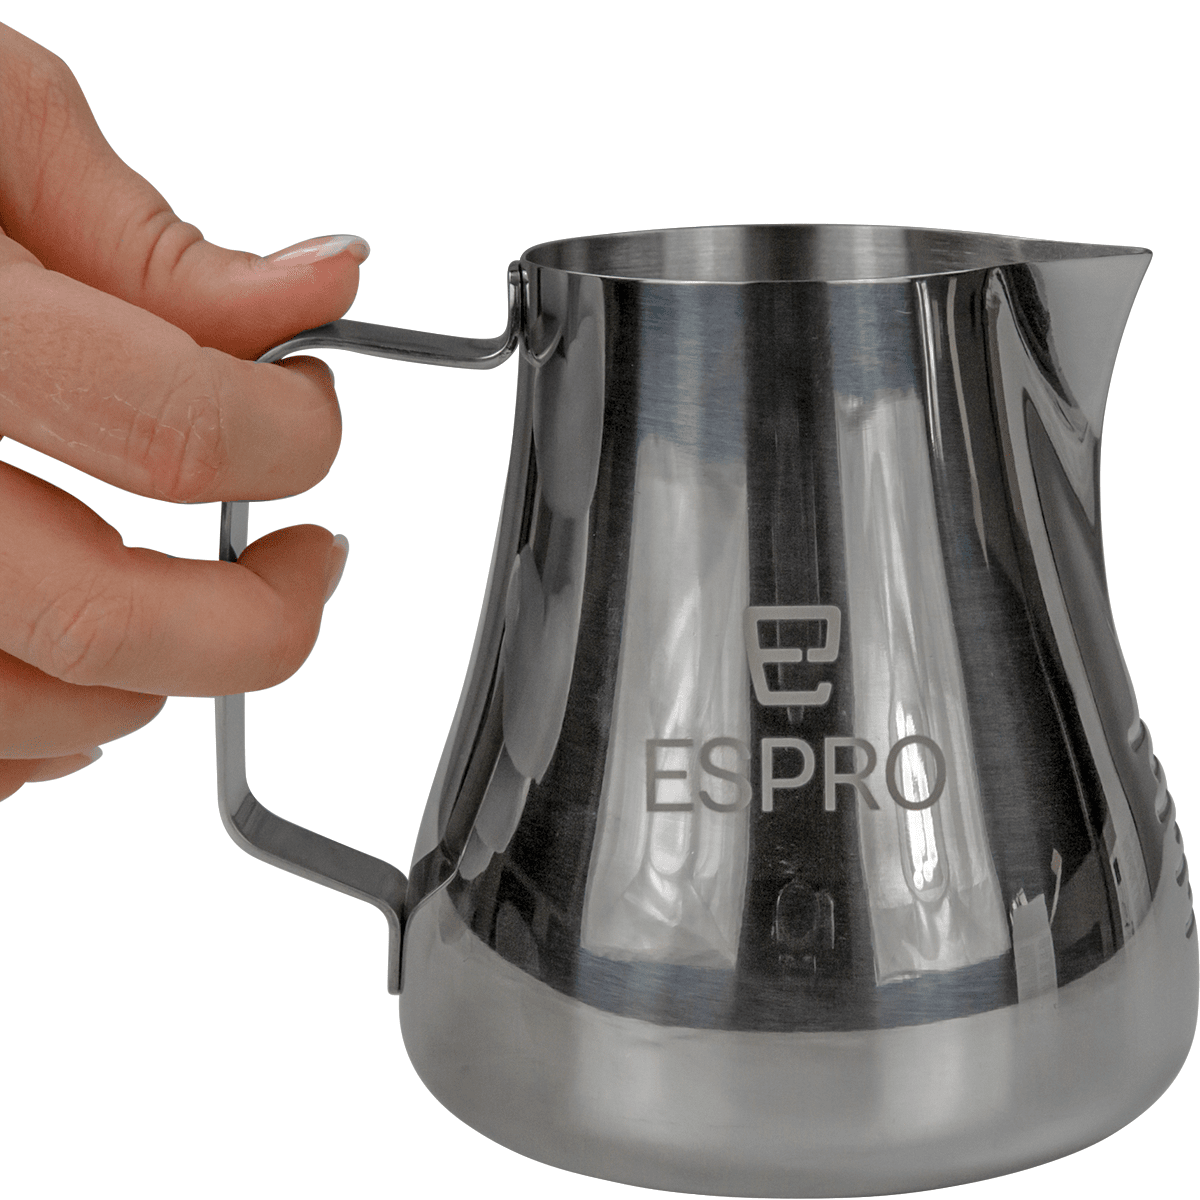 Espro Toroid 2 Steaming Pitcher - 20 oz